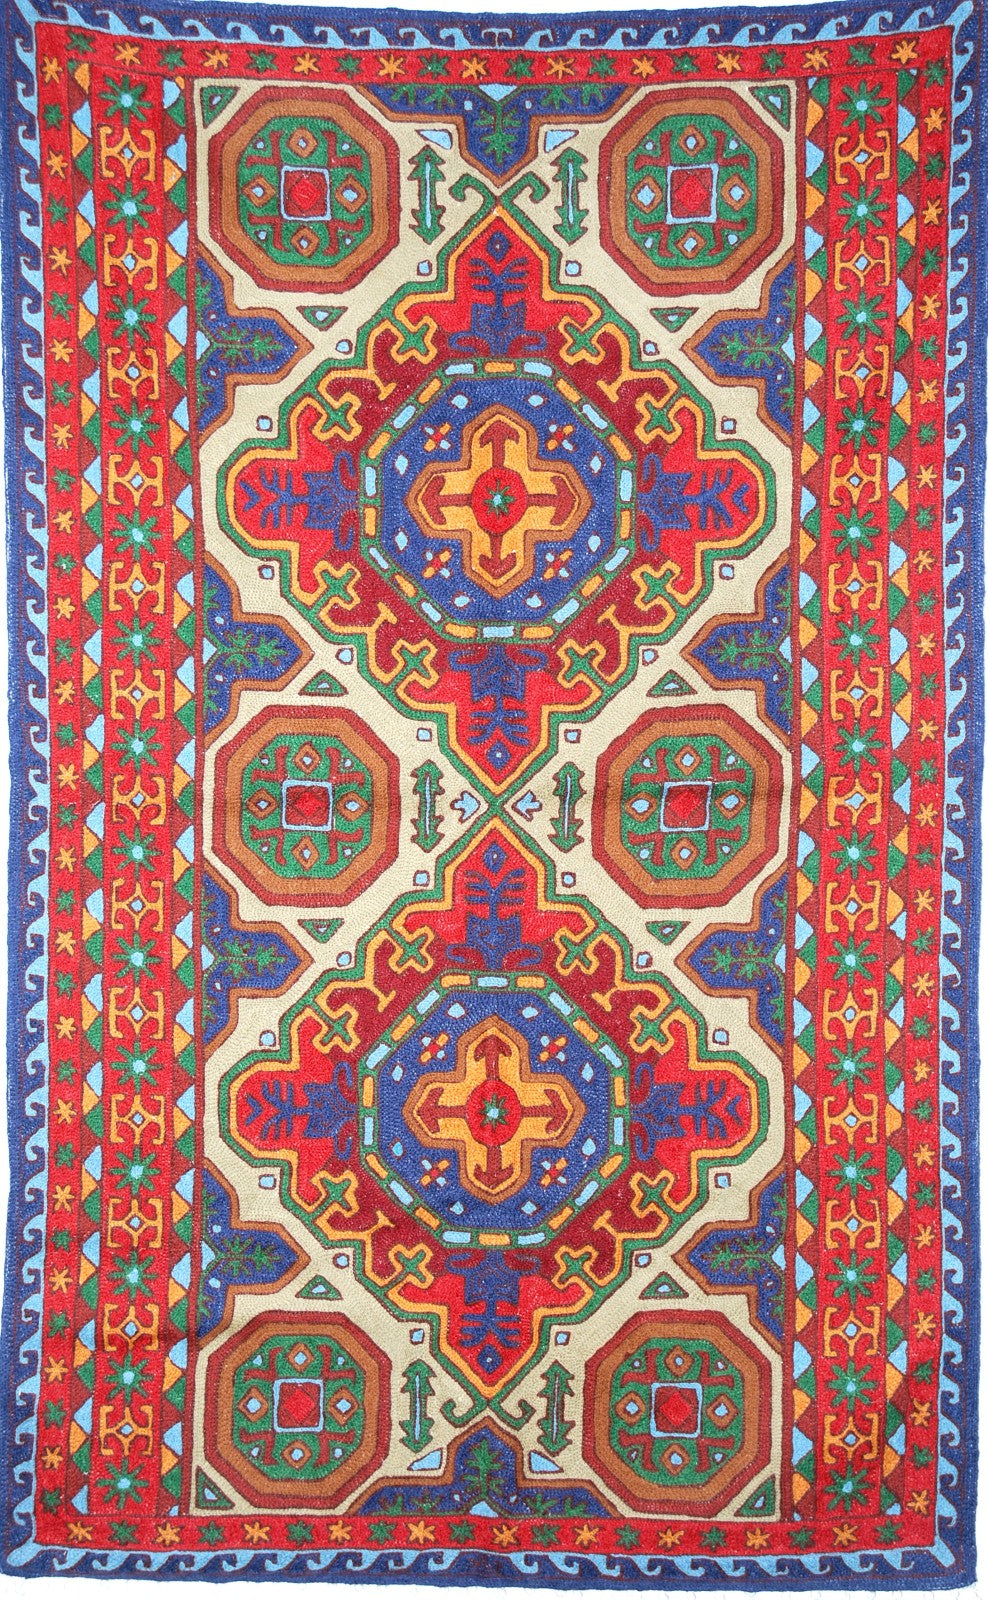 Kashmiri Wool Tapestry Kilim Woolen Area Rug, Multicolor Embroidery 3x5 feet #CWR15122